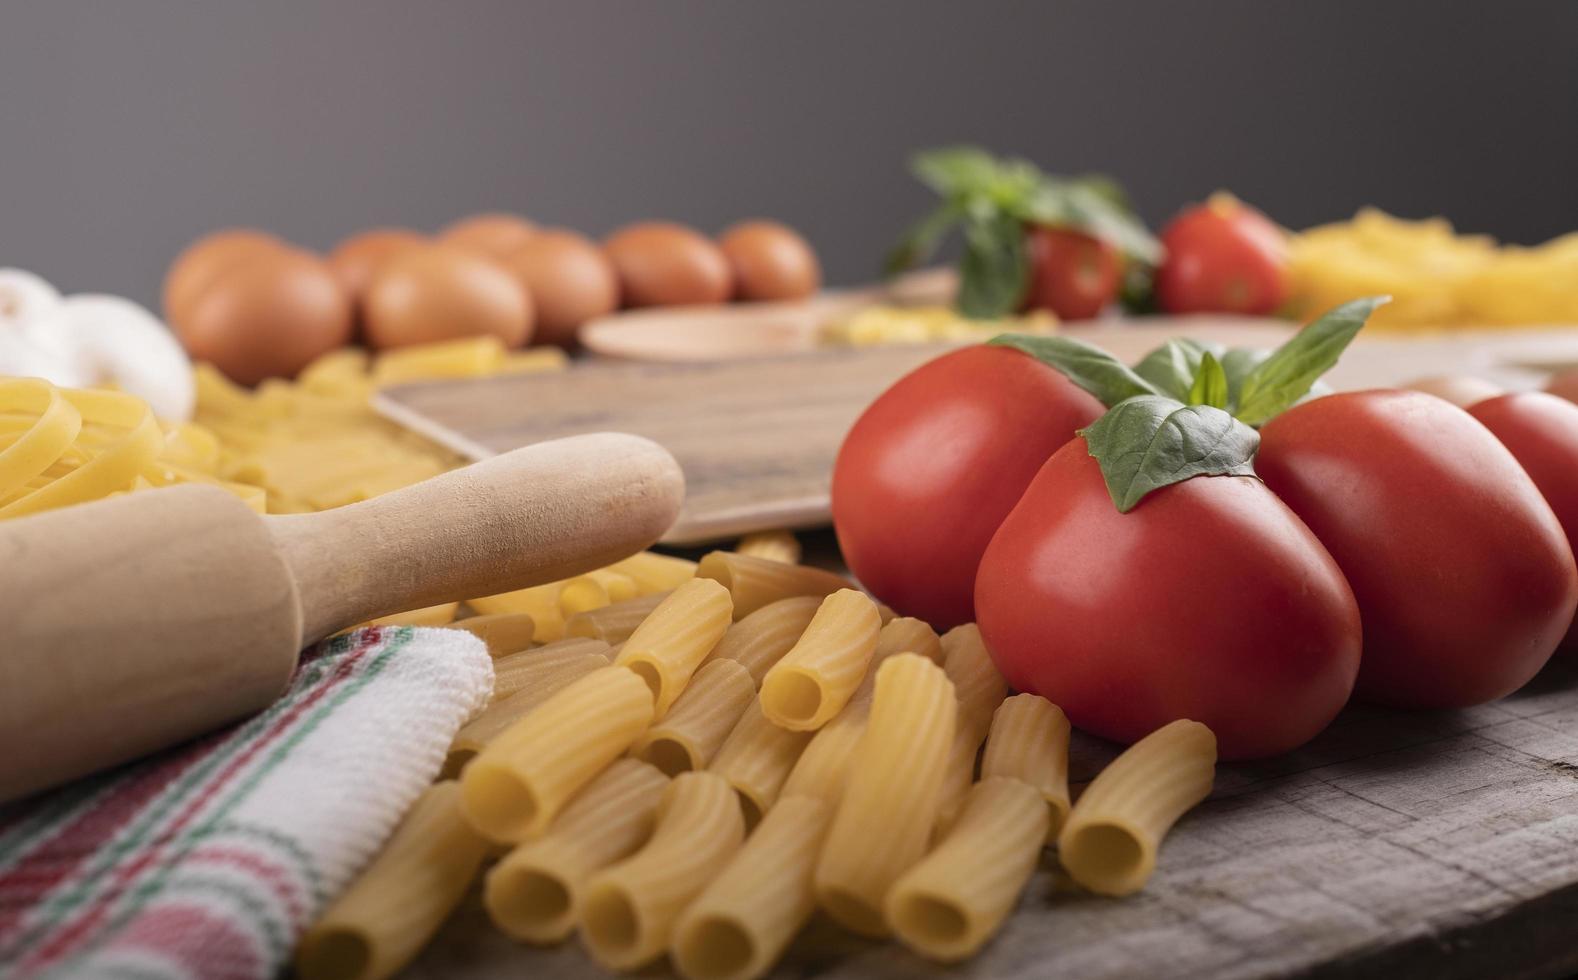 Pasta, tomates e ingredientes para restaurante italiano con amasadora de madera foto